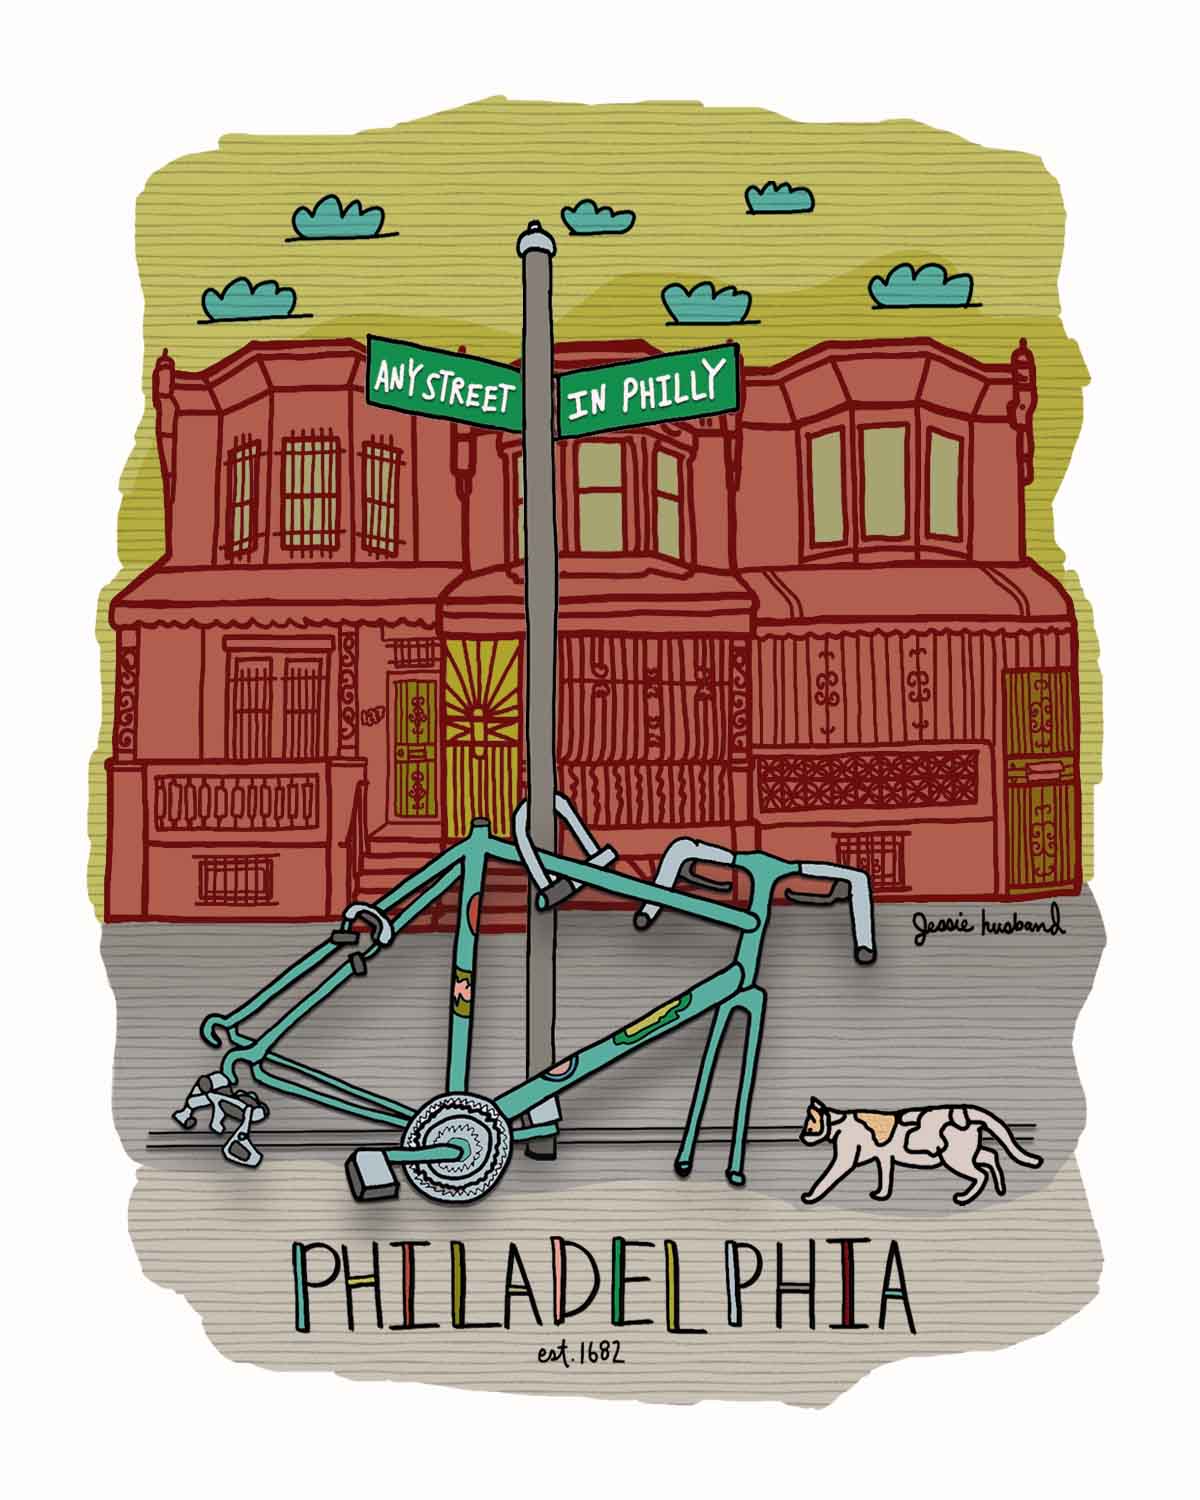 Philadelphia bike parts print - Jessie husband